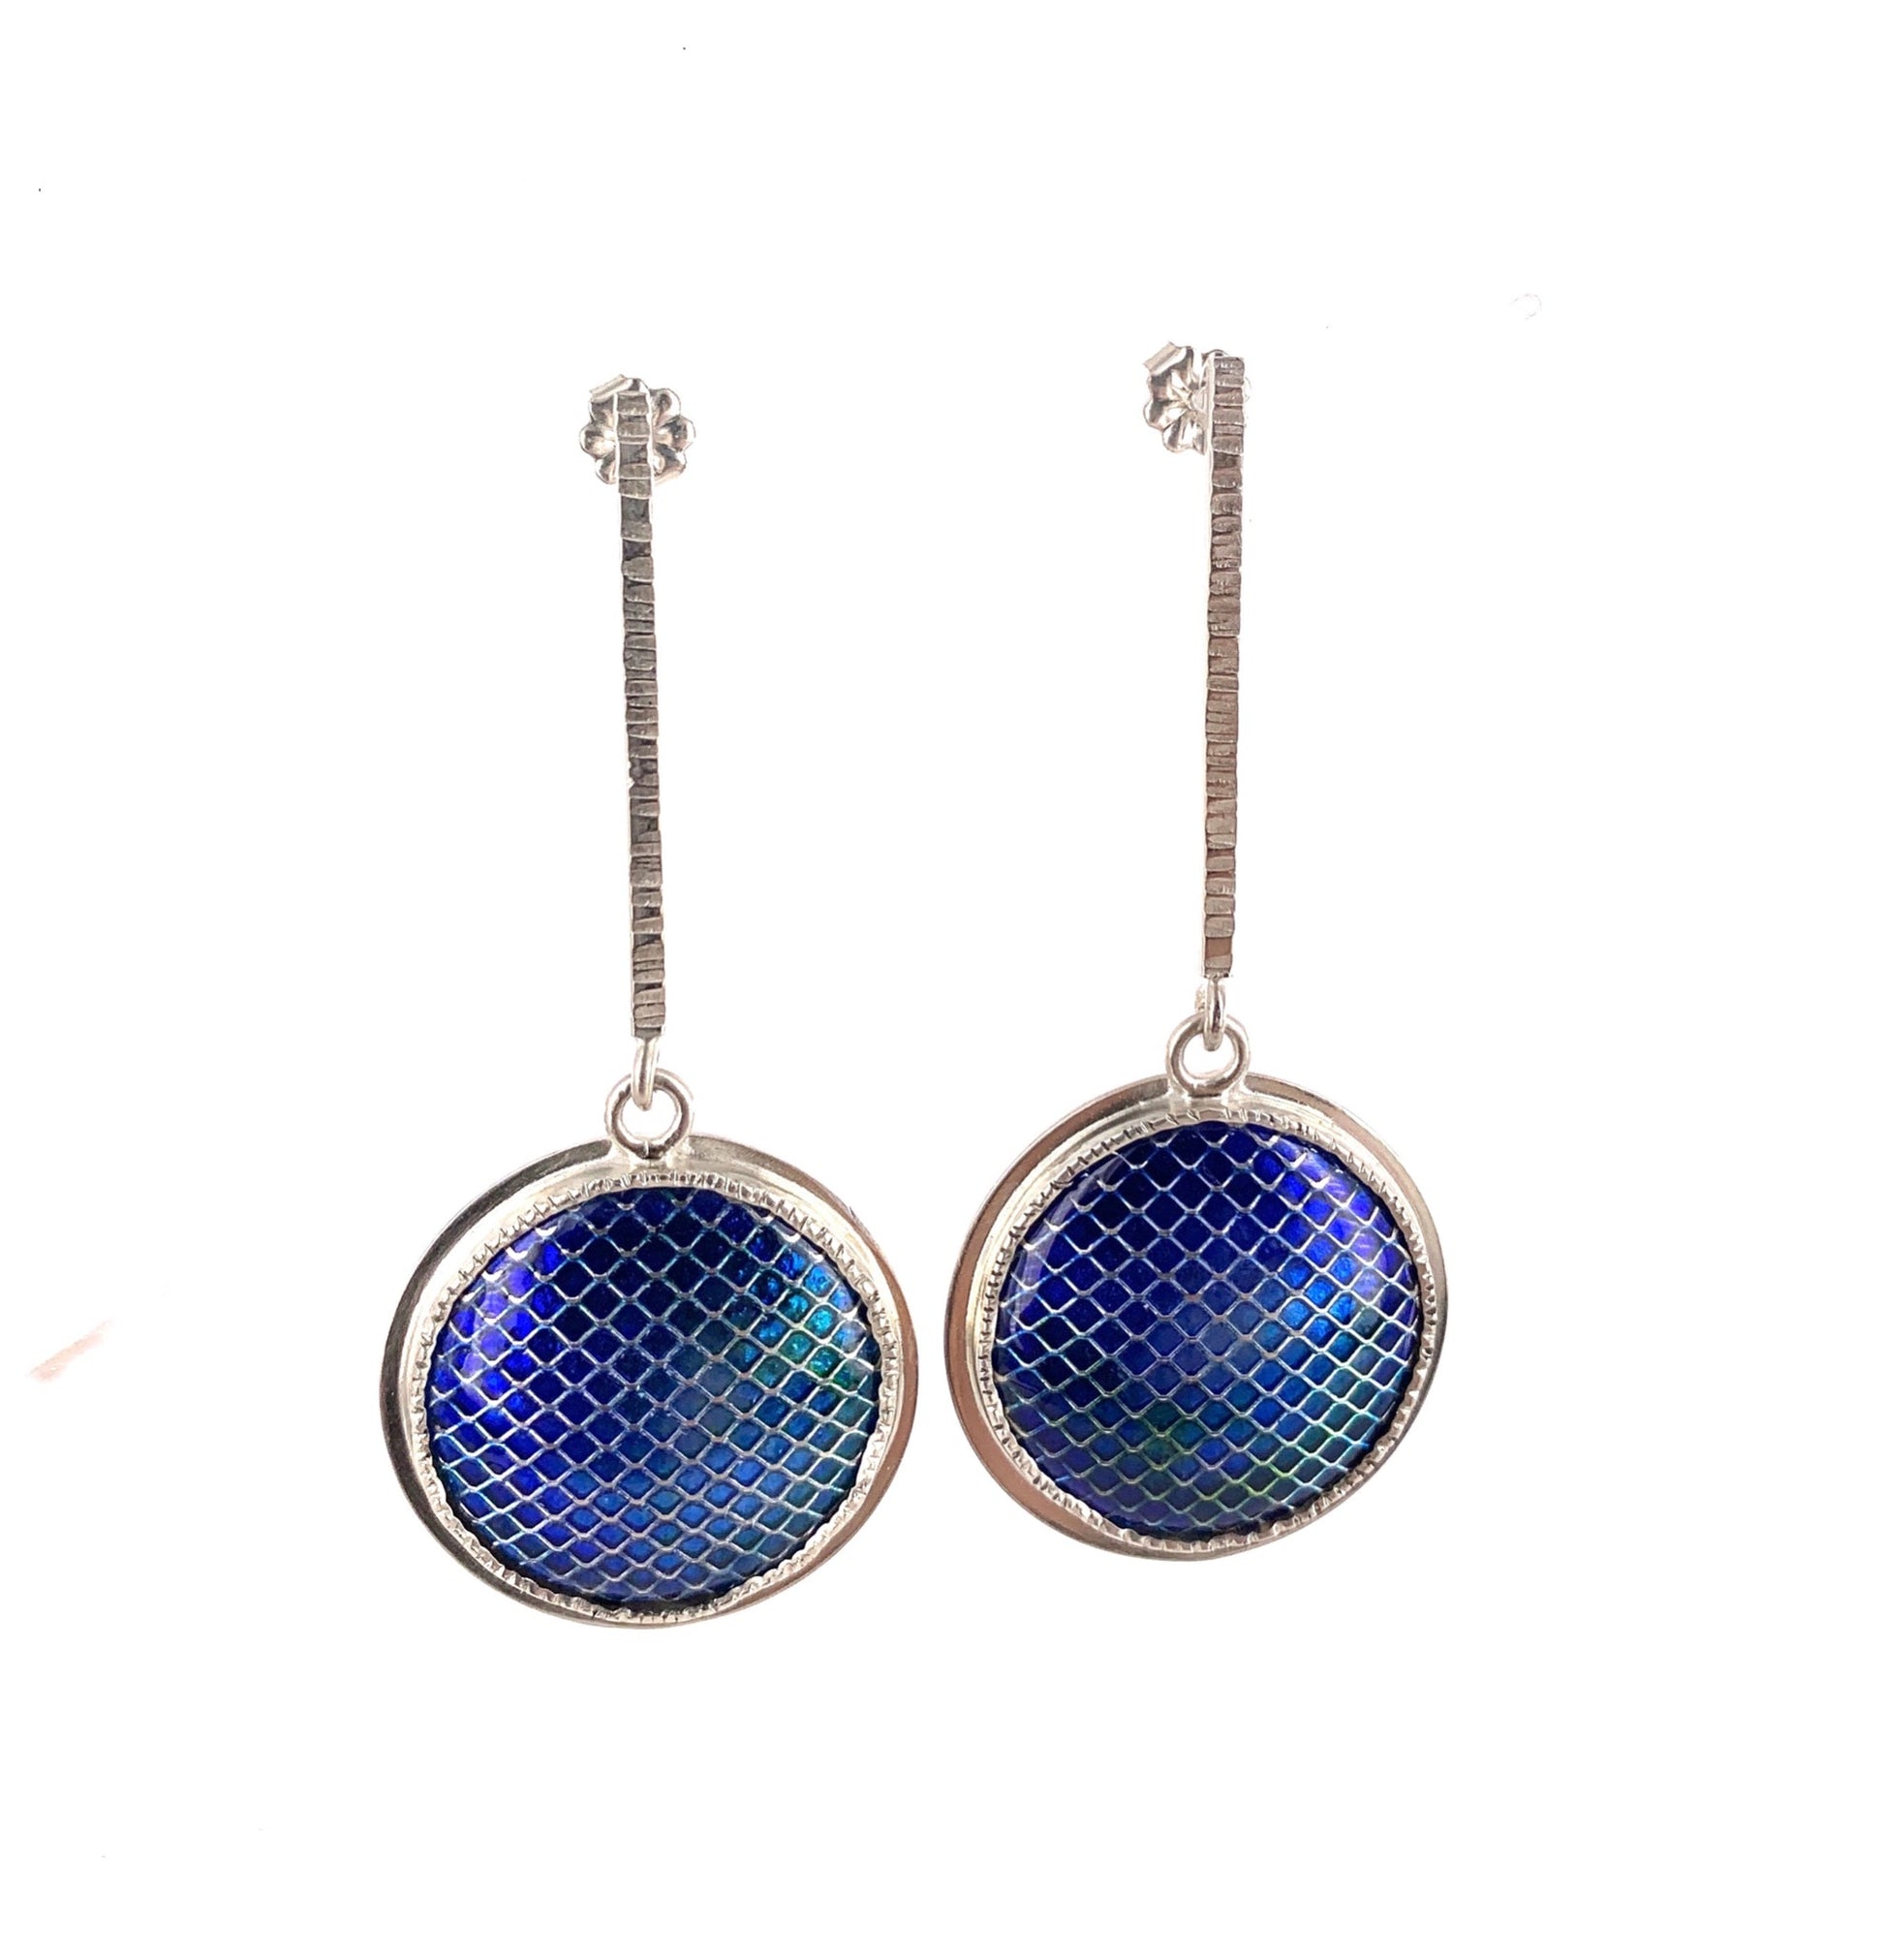 cobalt blue vitreous enamel earrings set in sterling silver